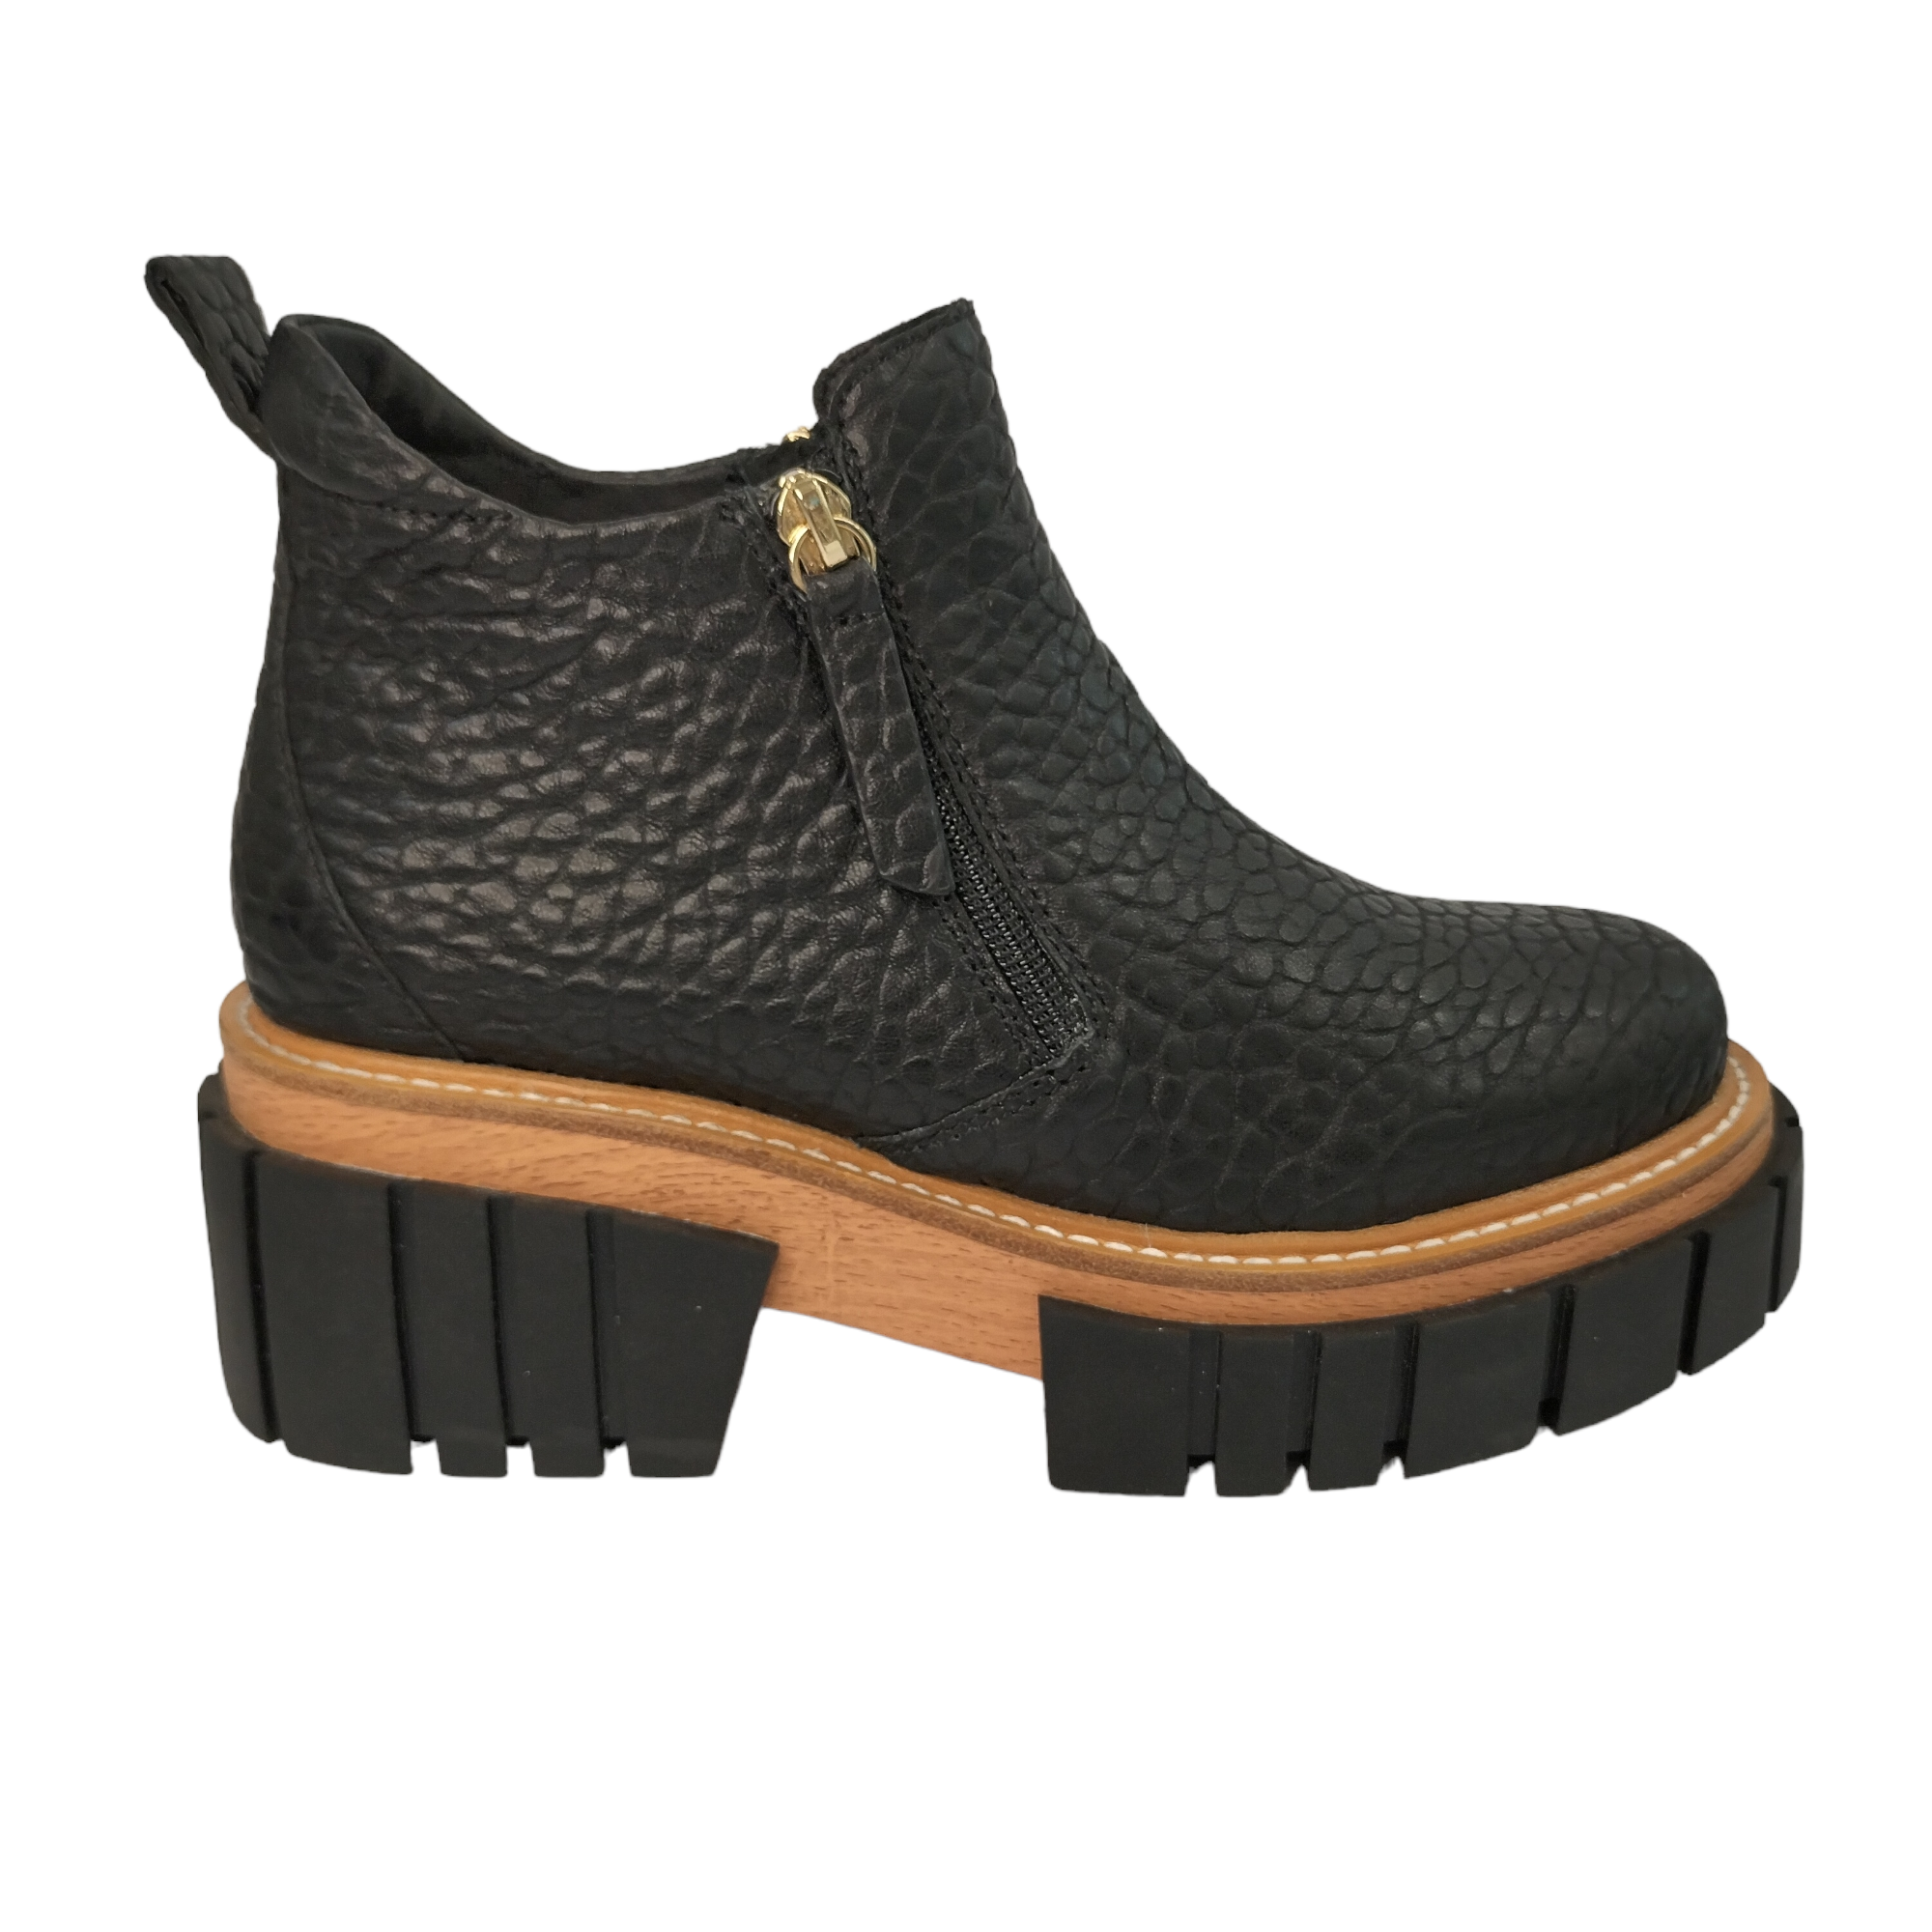 Blake - shoe&me - Tamara - Boot - Boots, Wedges, Winter, Womens